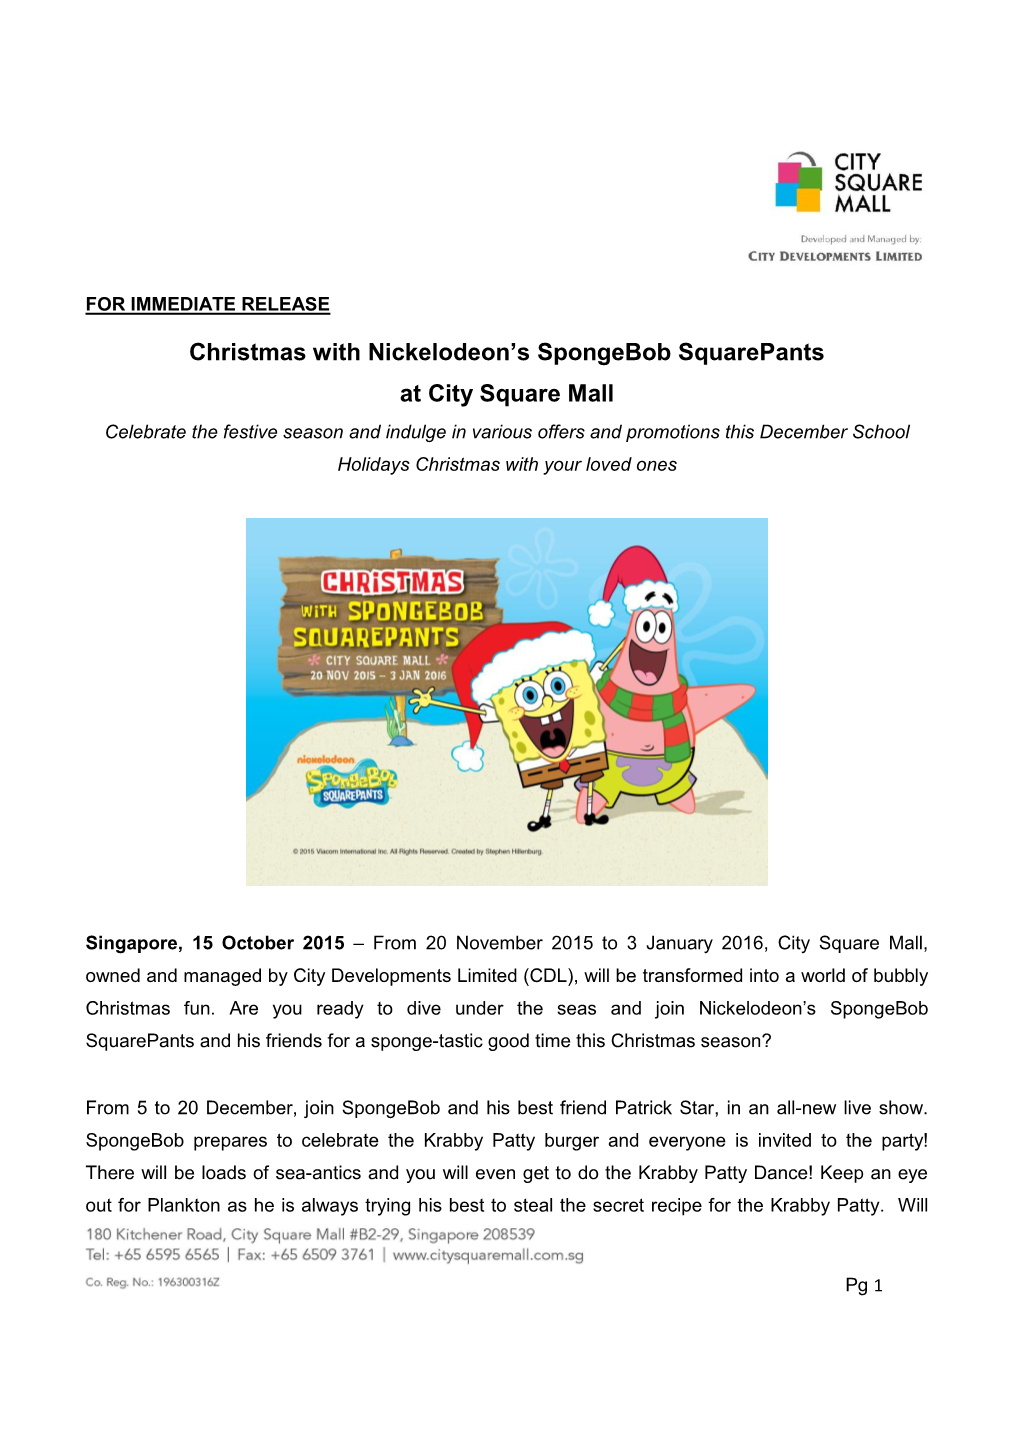 Christmas with Nickelodeon's Spongebob Squarepants at City